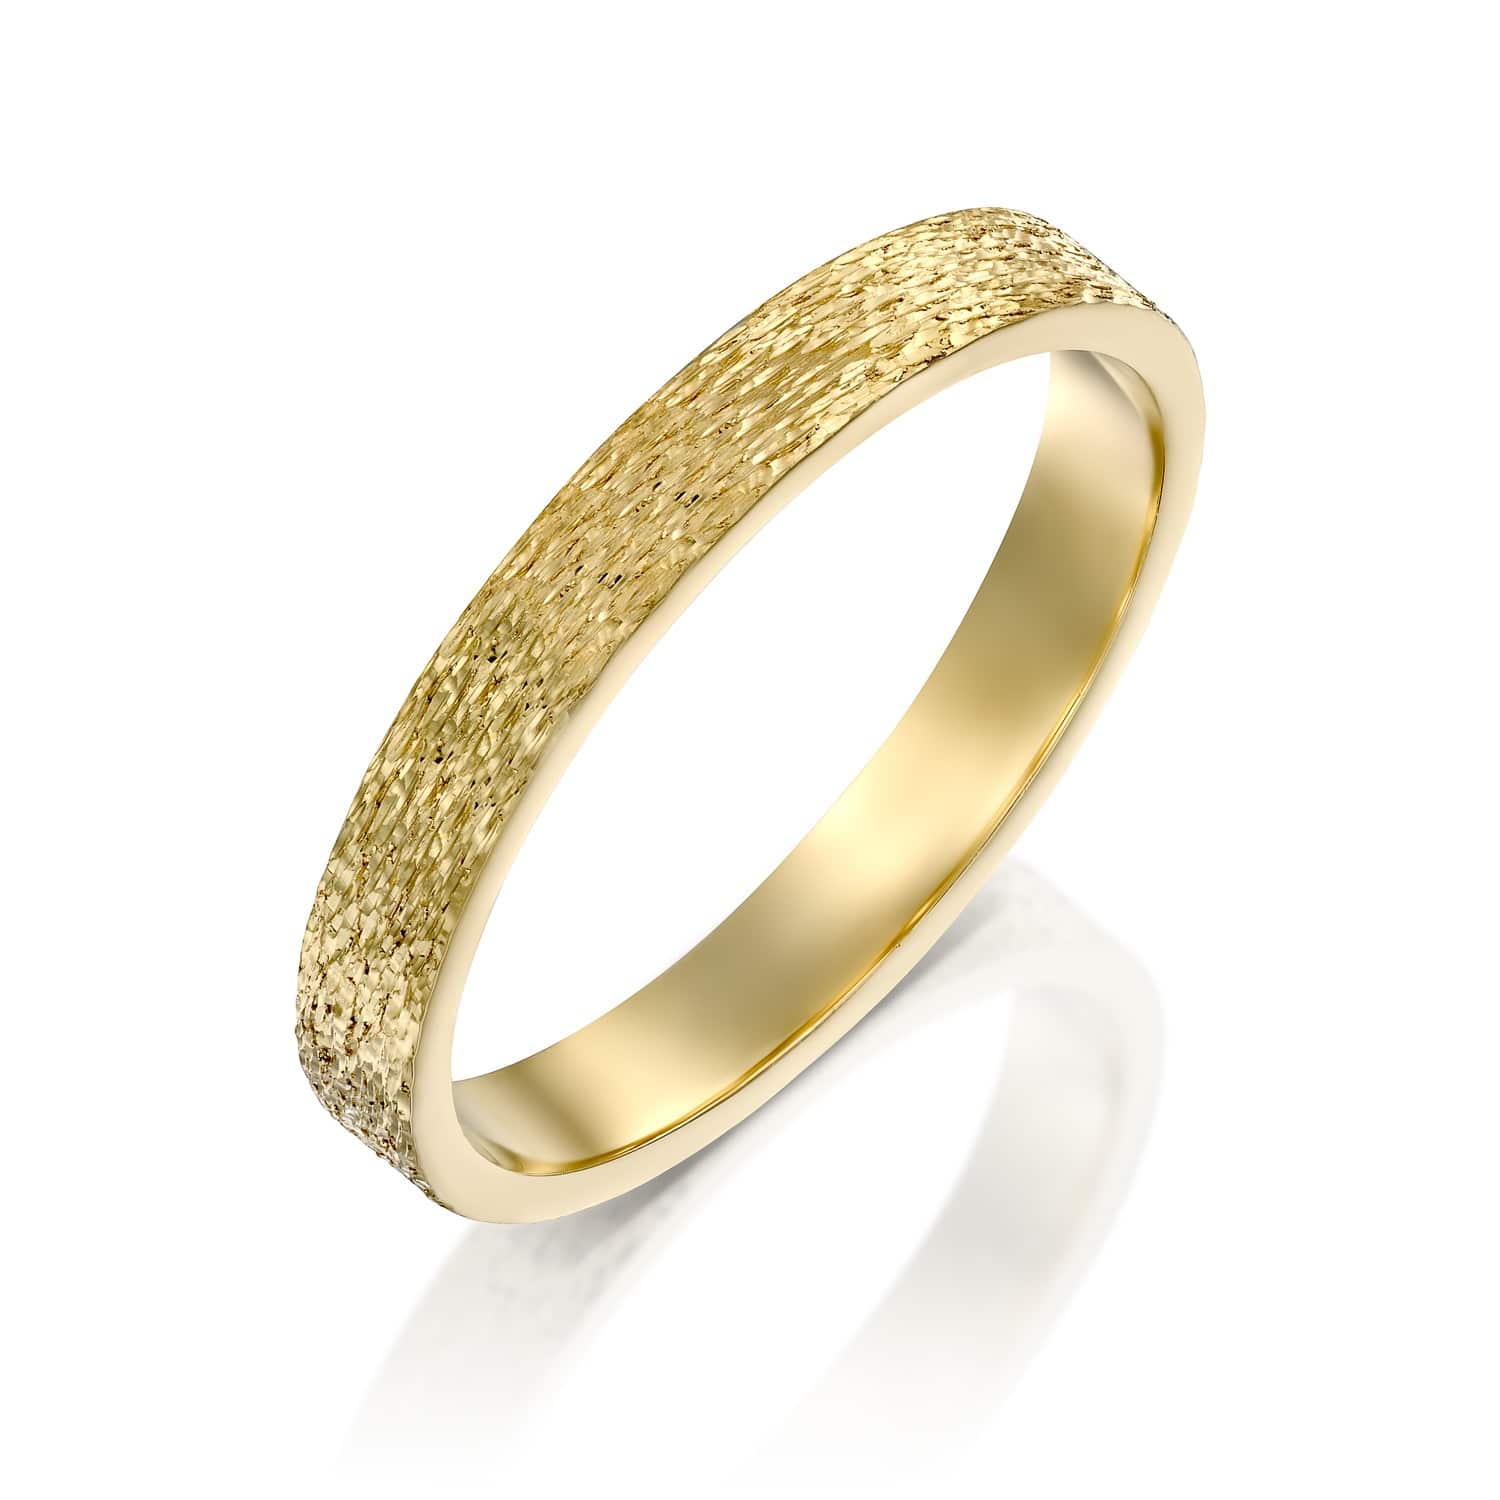 Inward Impolite Dignified טבעת נישואין לגבר רמון | מאור תכשיטים – טבעות אירוסין מיוחדות, טבעות נישואין